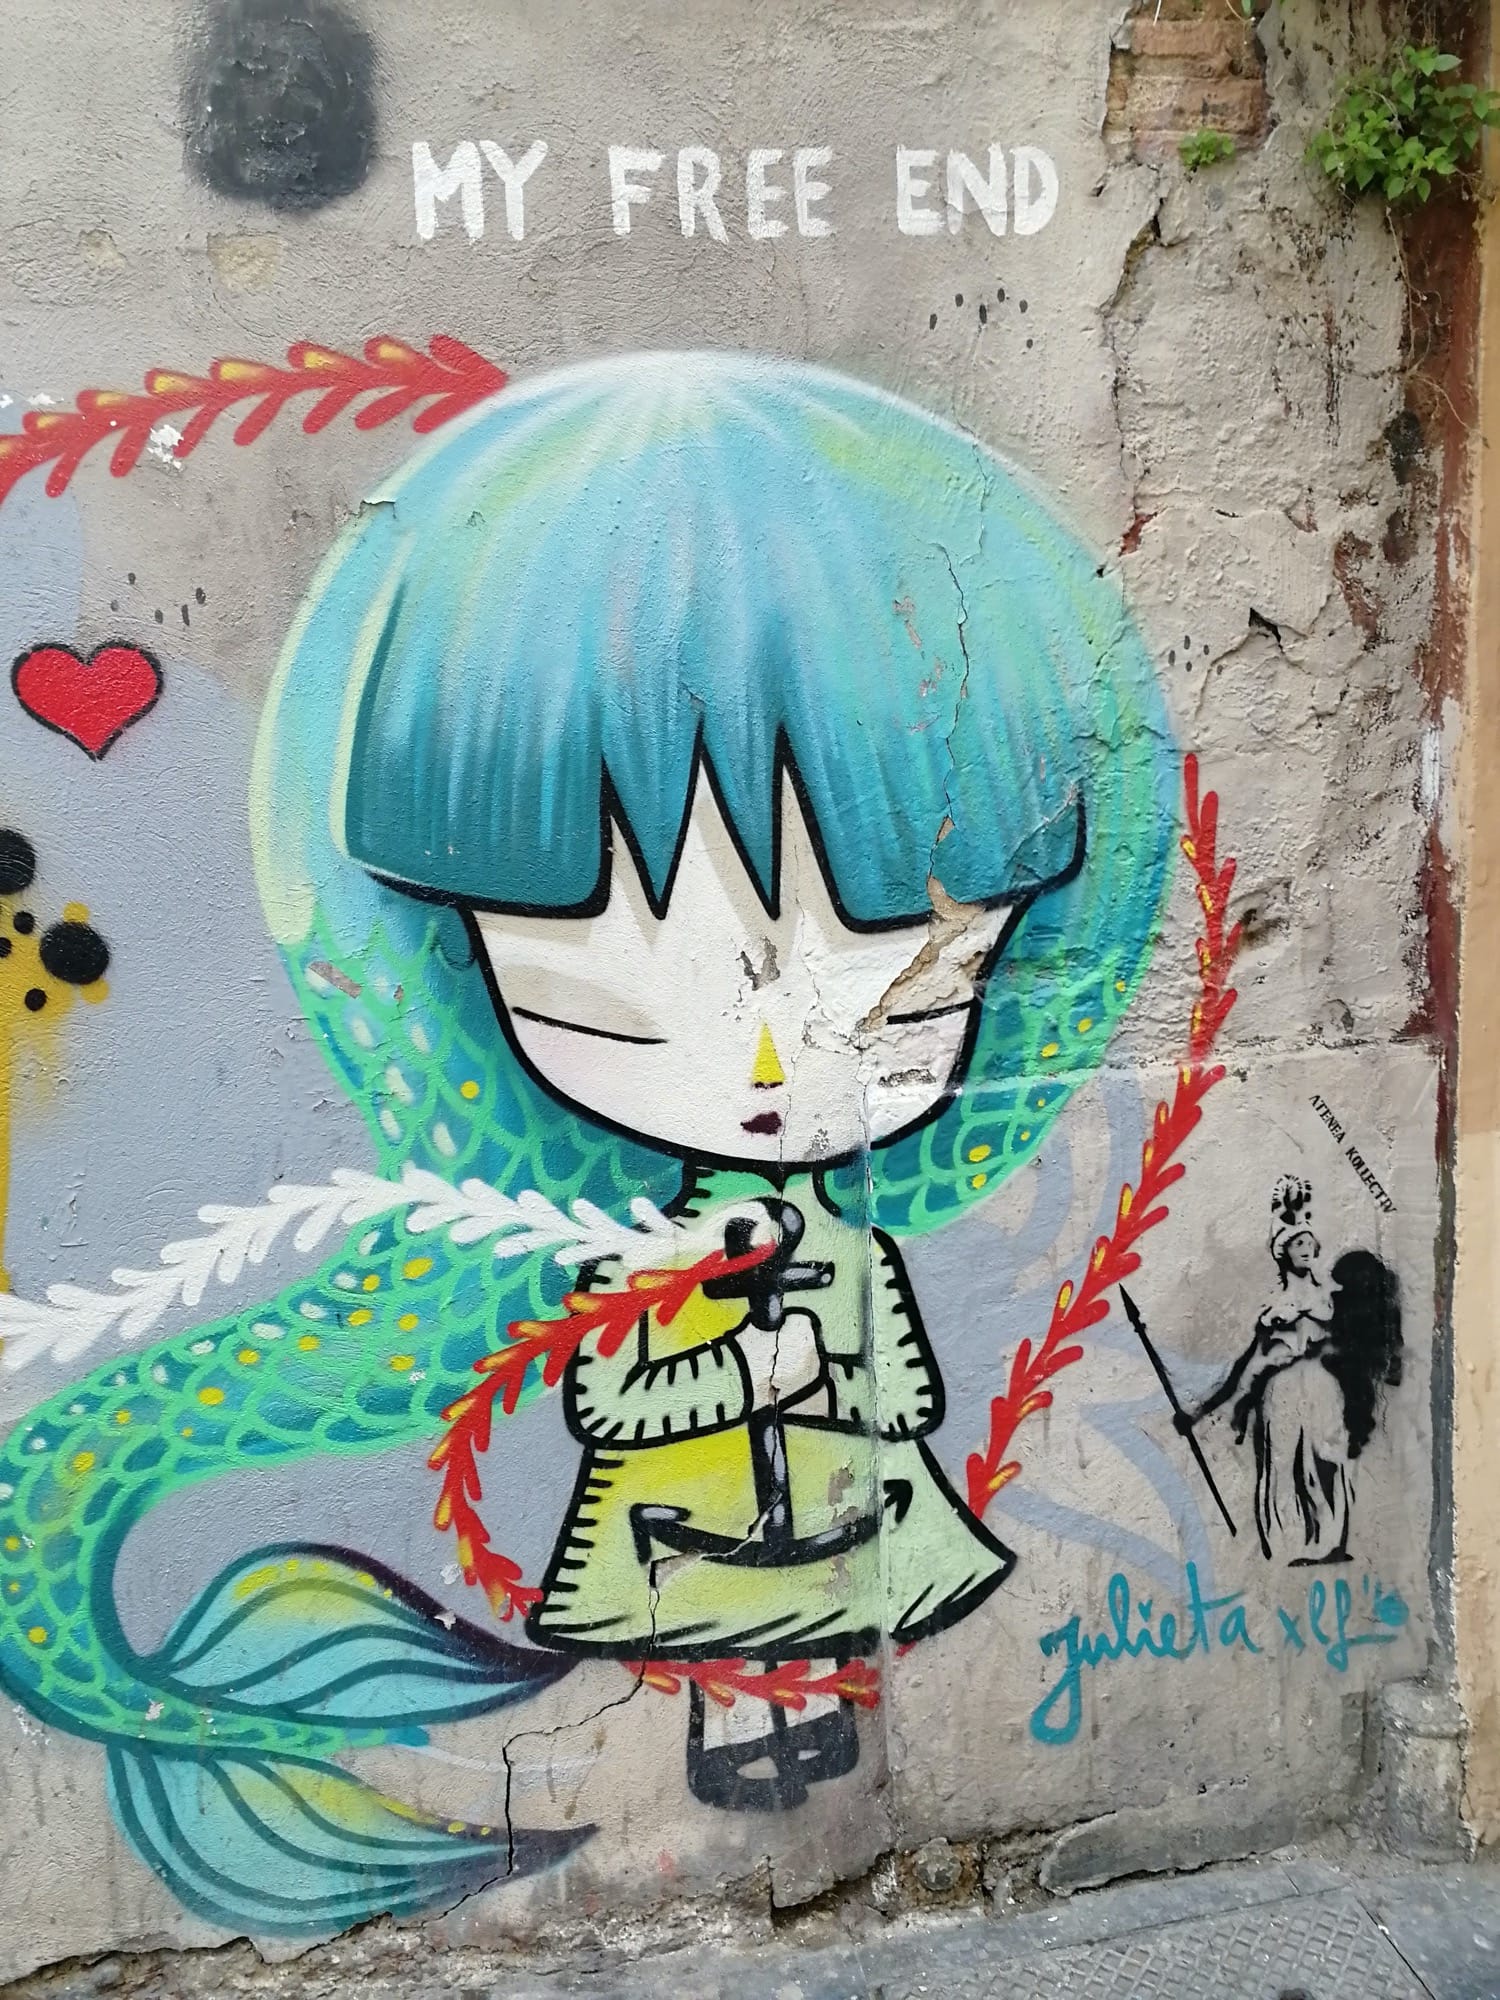 Graffiti 3699  by the artist Julieta xlf captured by Rabot in València Spain